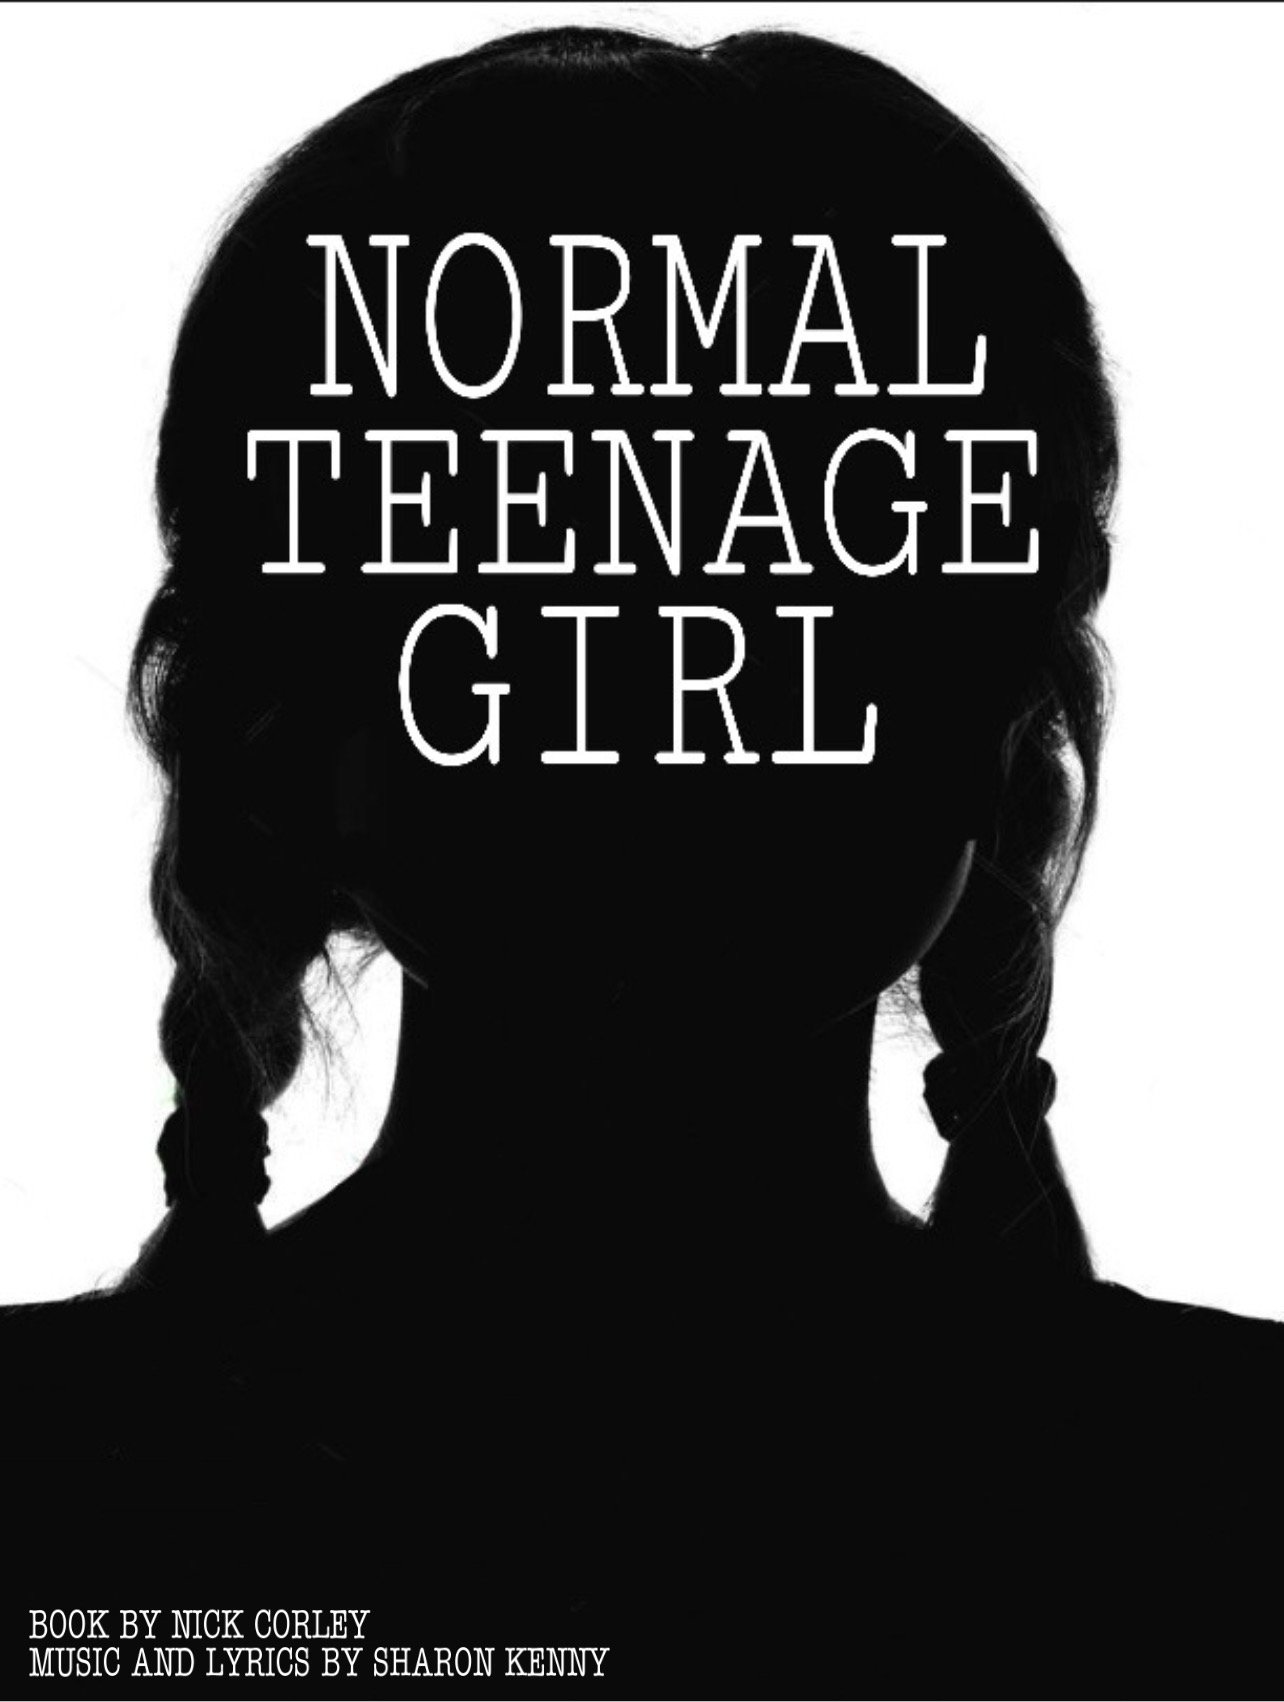 NORMAL TEENAGE GIRL